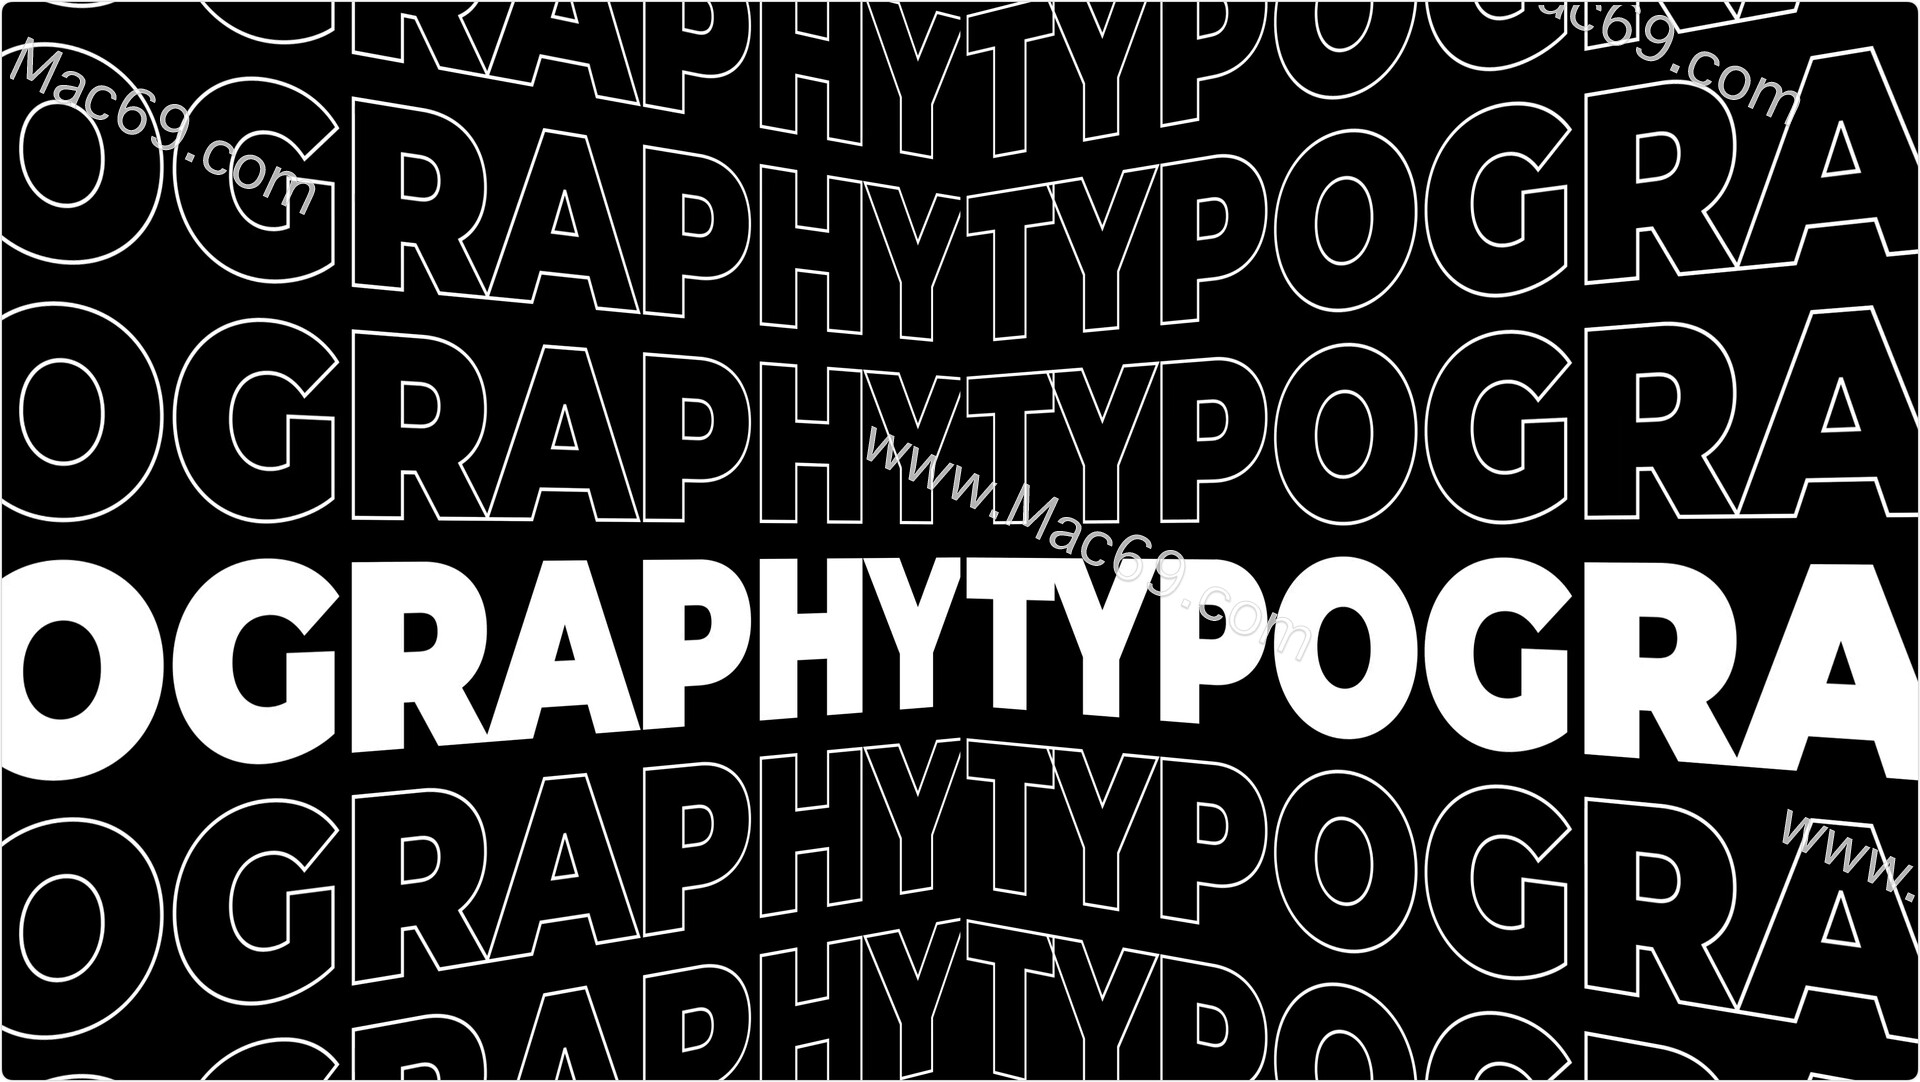 Typography Promo Mac(广告文字排版促销展示Pr模板)